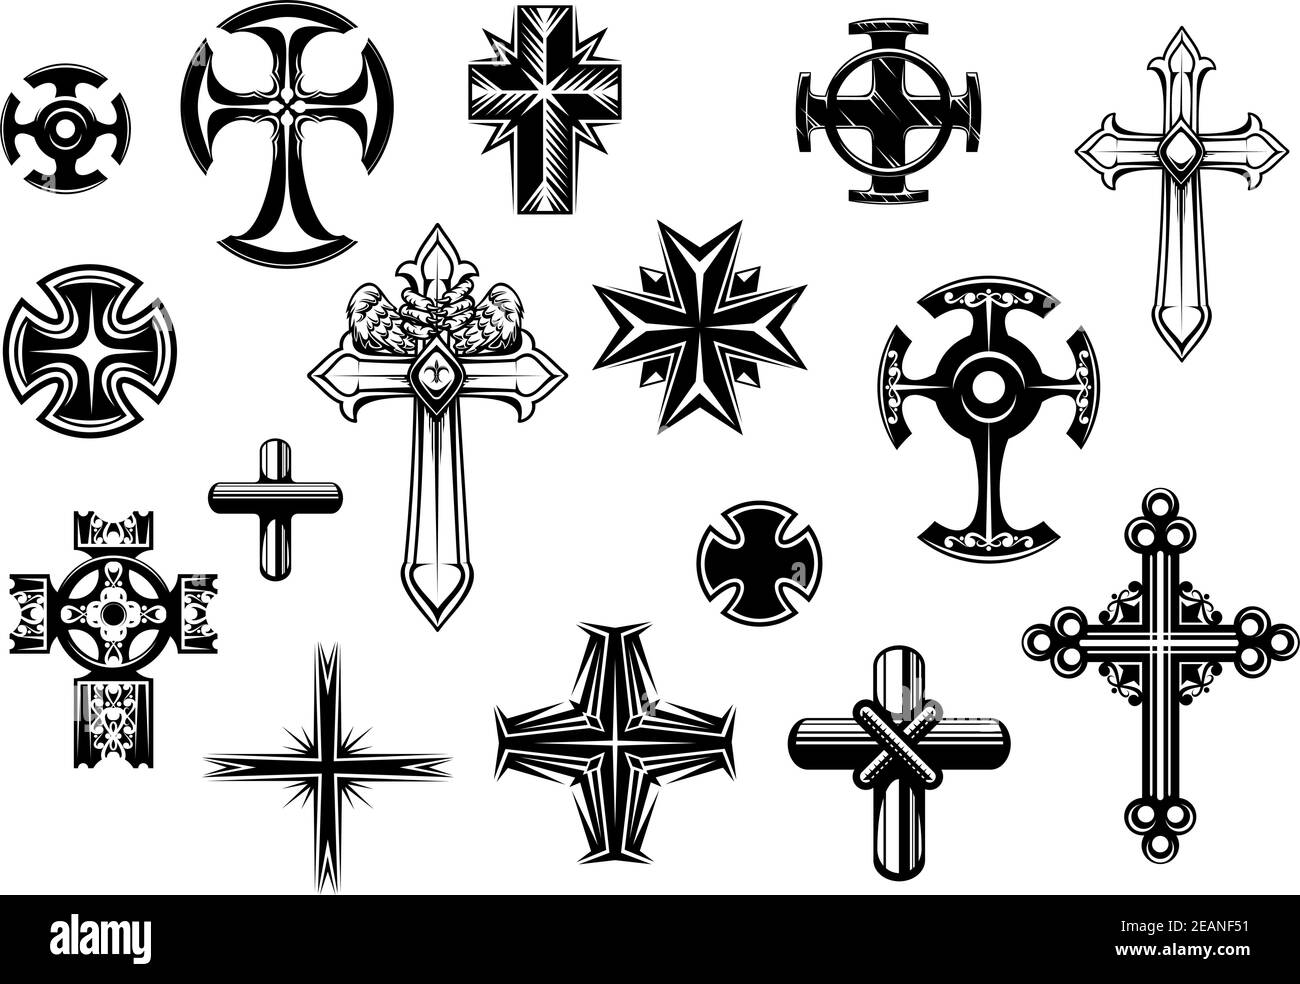 Religious crosses set isolated on white background for religious ...